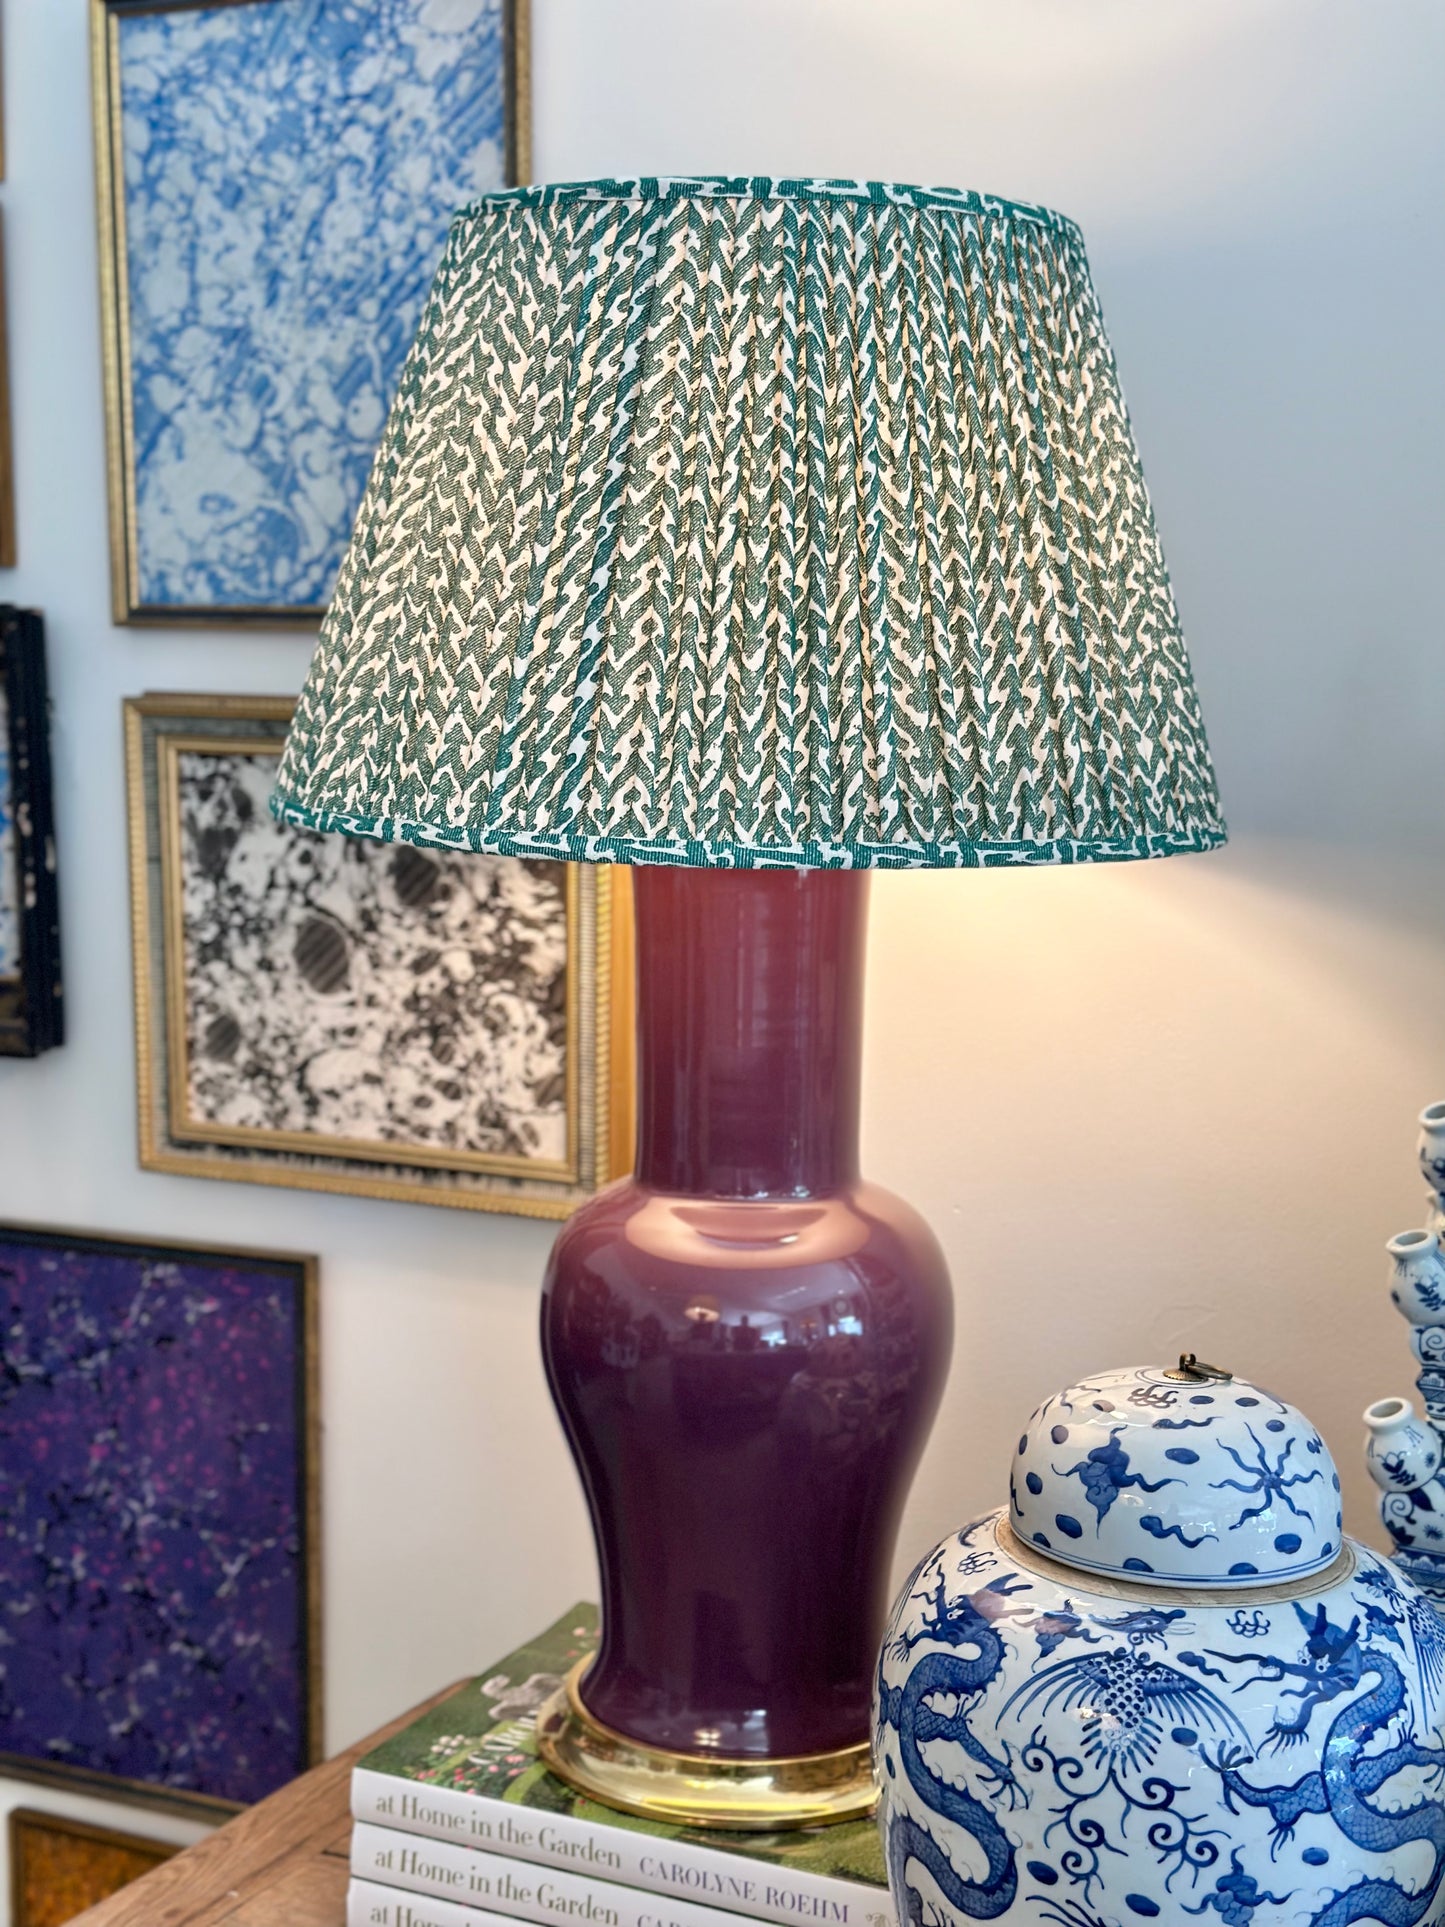 Christopher Spitzmiller Garniture Lamp in Aubergine